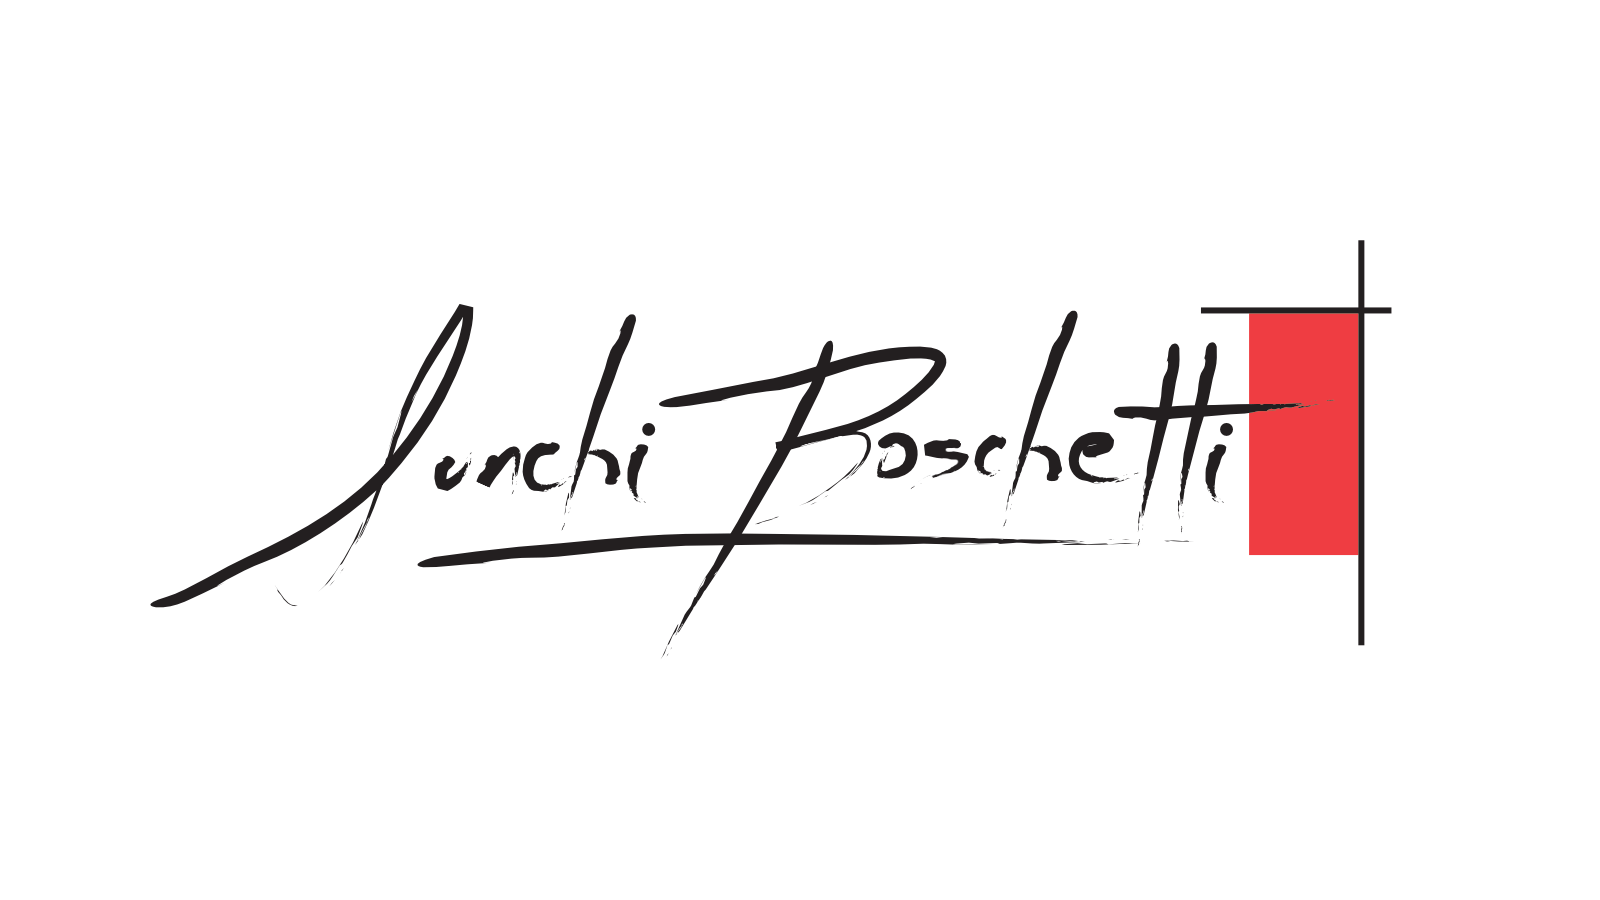 Sunchi Bochetti 2002